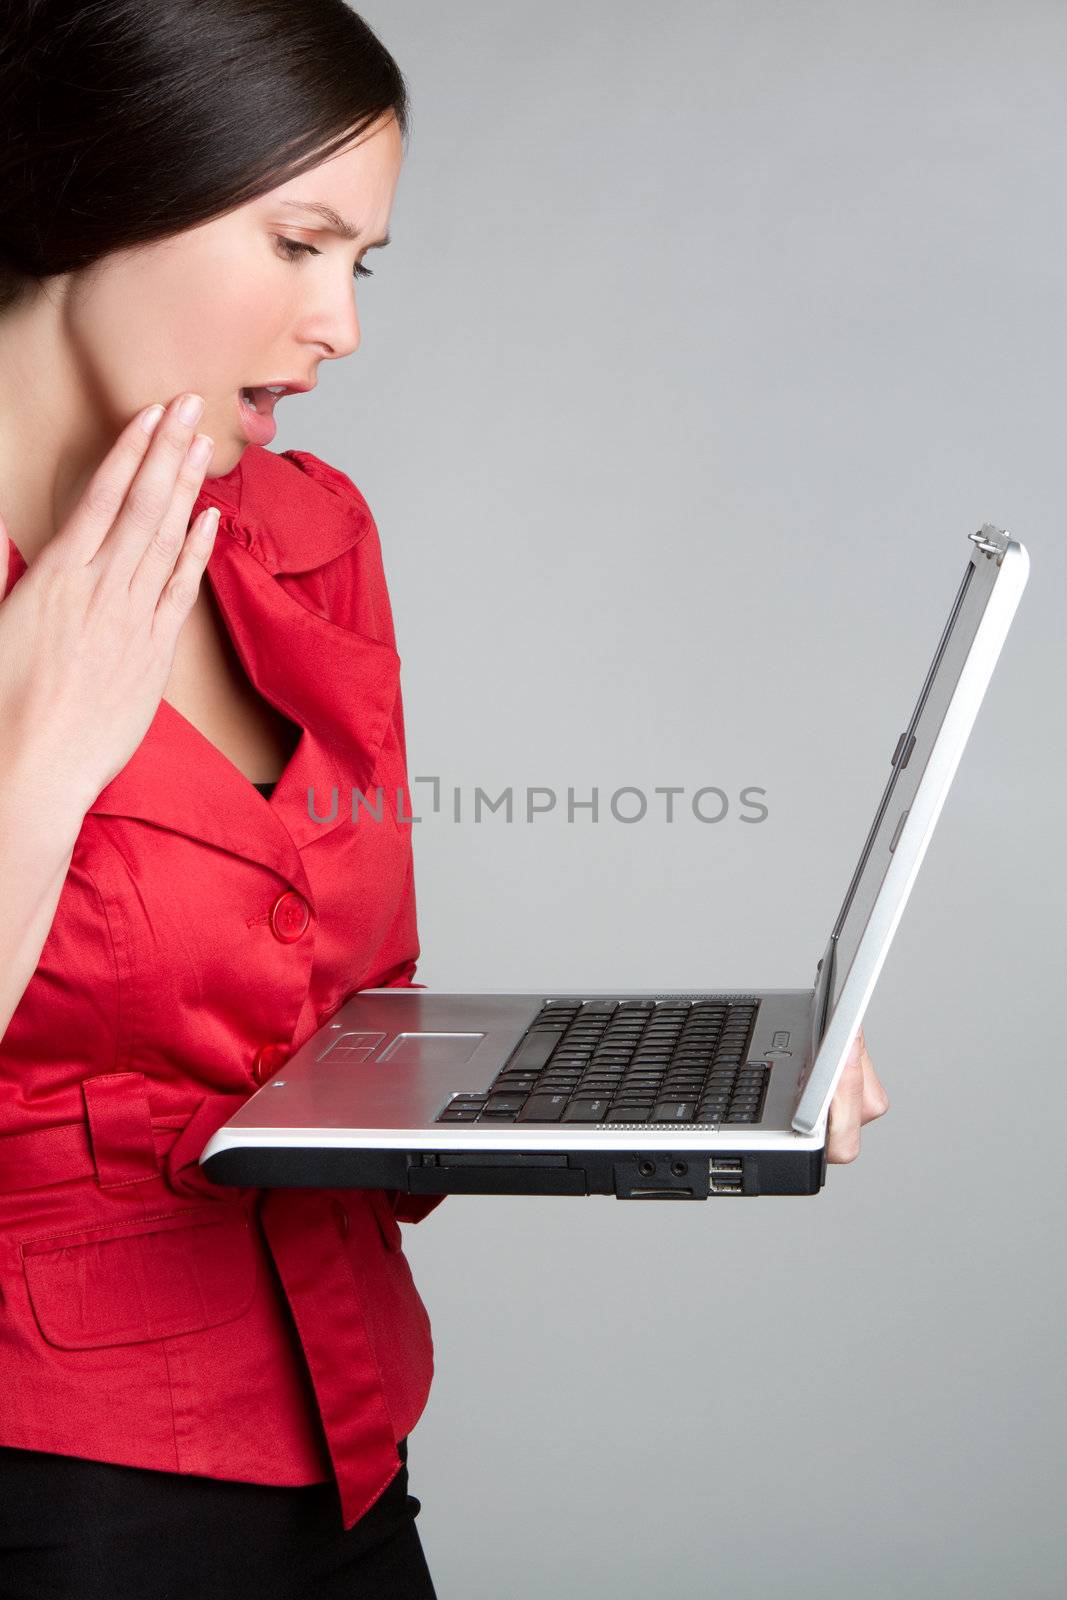 Shocked Laptop Woman by keeweeboy